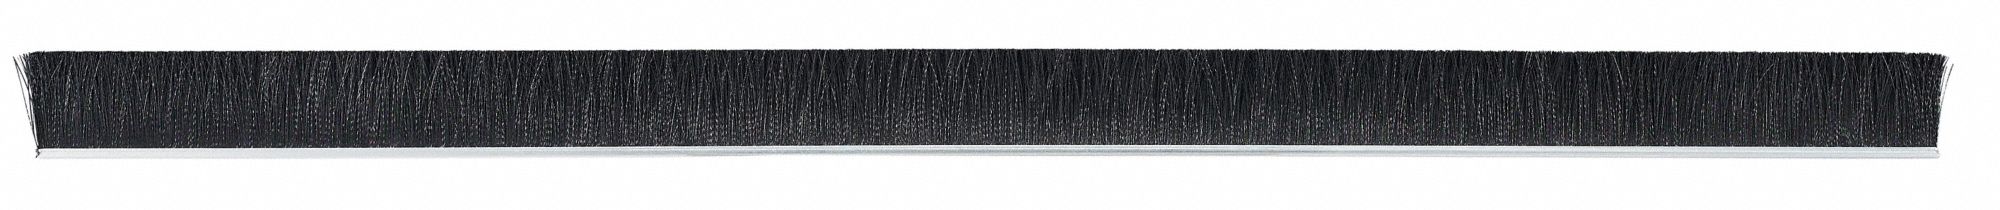 3/4 Trim Length 0.006 Bristle Diameter Tanis Brush MB252024 1/8 Stainless Steel Backed Strip Brush with Crimped Black Nylon Bristles 24 Overall Length 